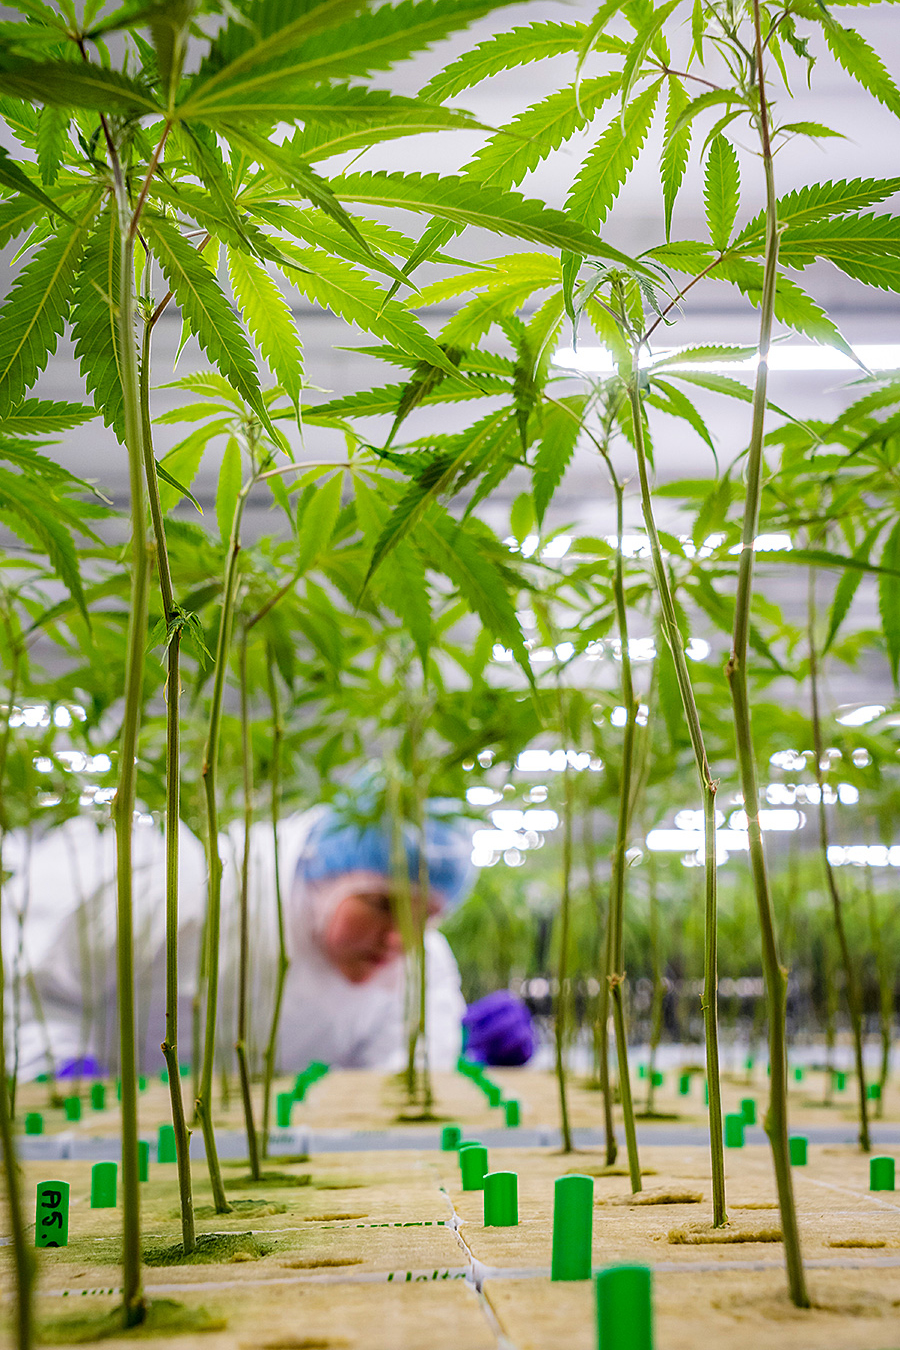 Inspection cannabis plants